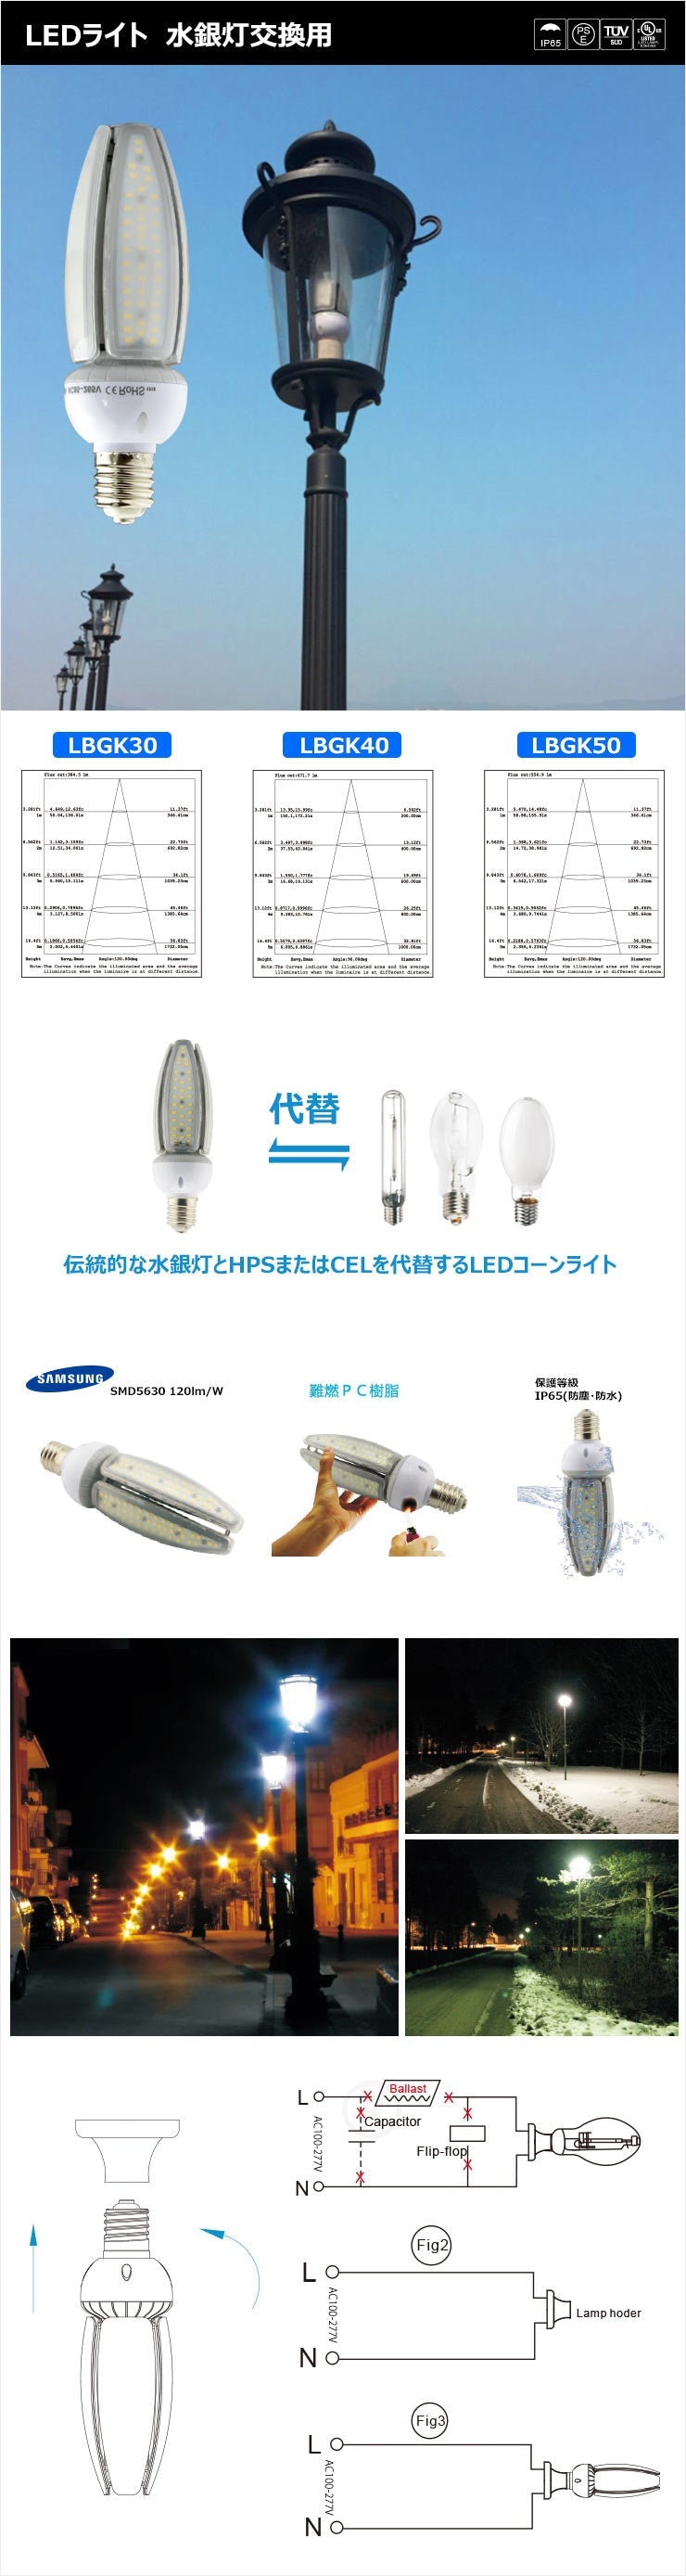 LED 水銀ランプ 120W相当 コーン型 LED電球 E26 E39 電源内蔵 防塵